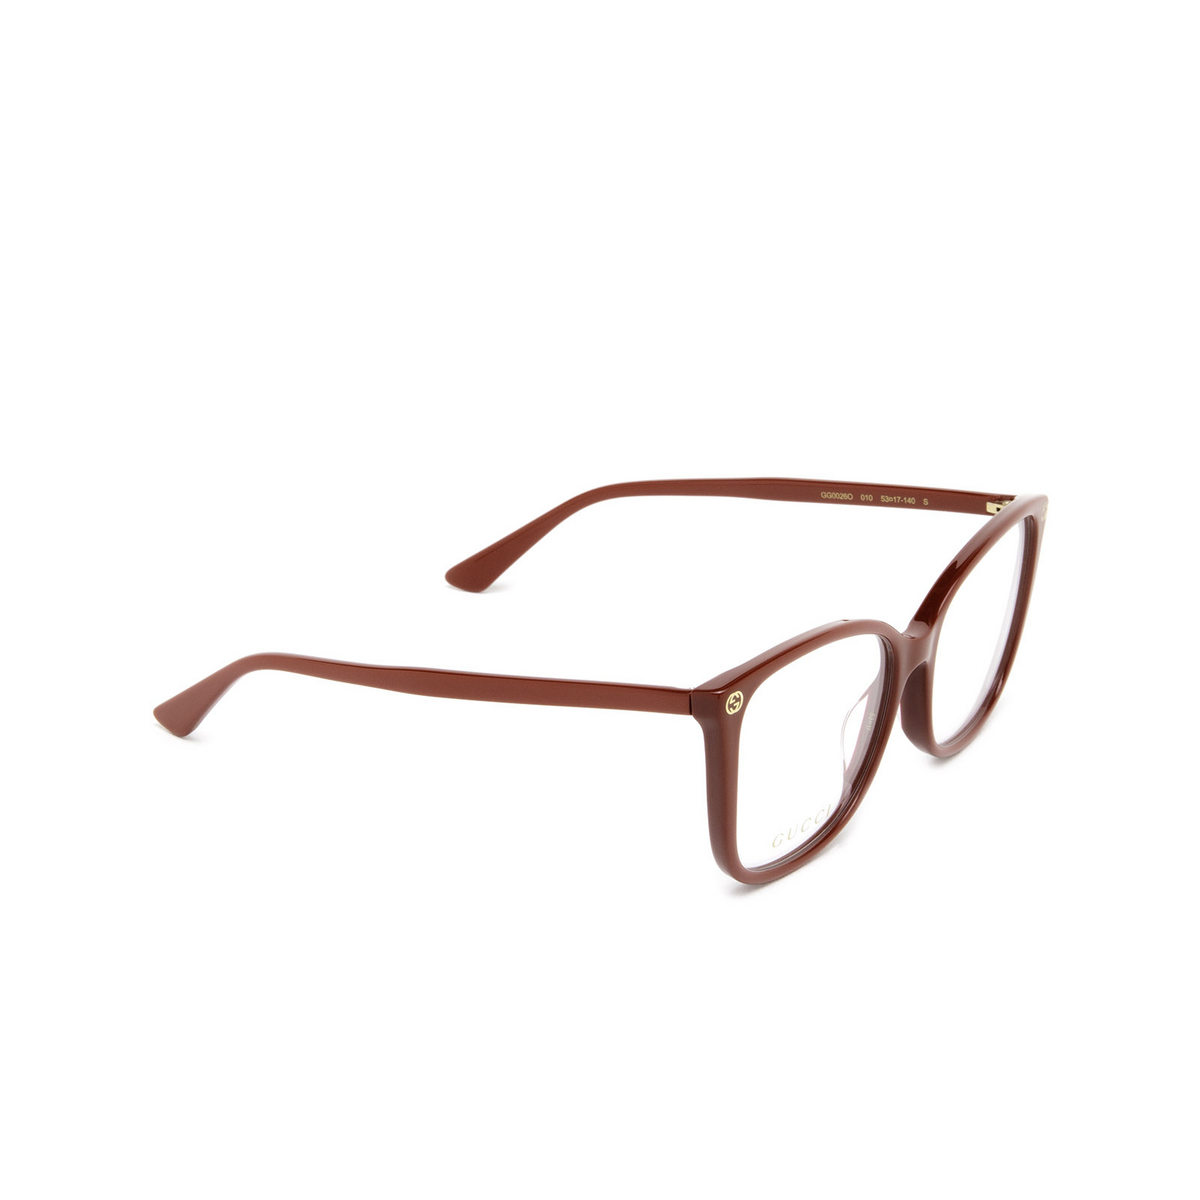 Gucci® Cat-eye Eyeglasses: GG0026O color Red 010 - three-quarters view.